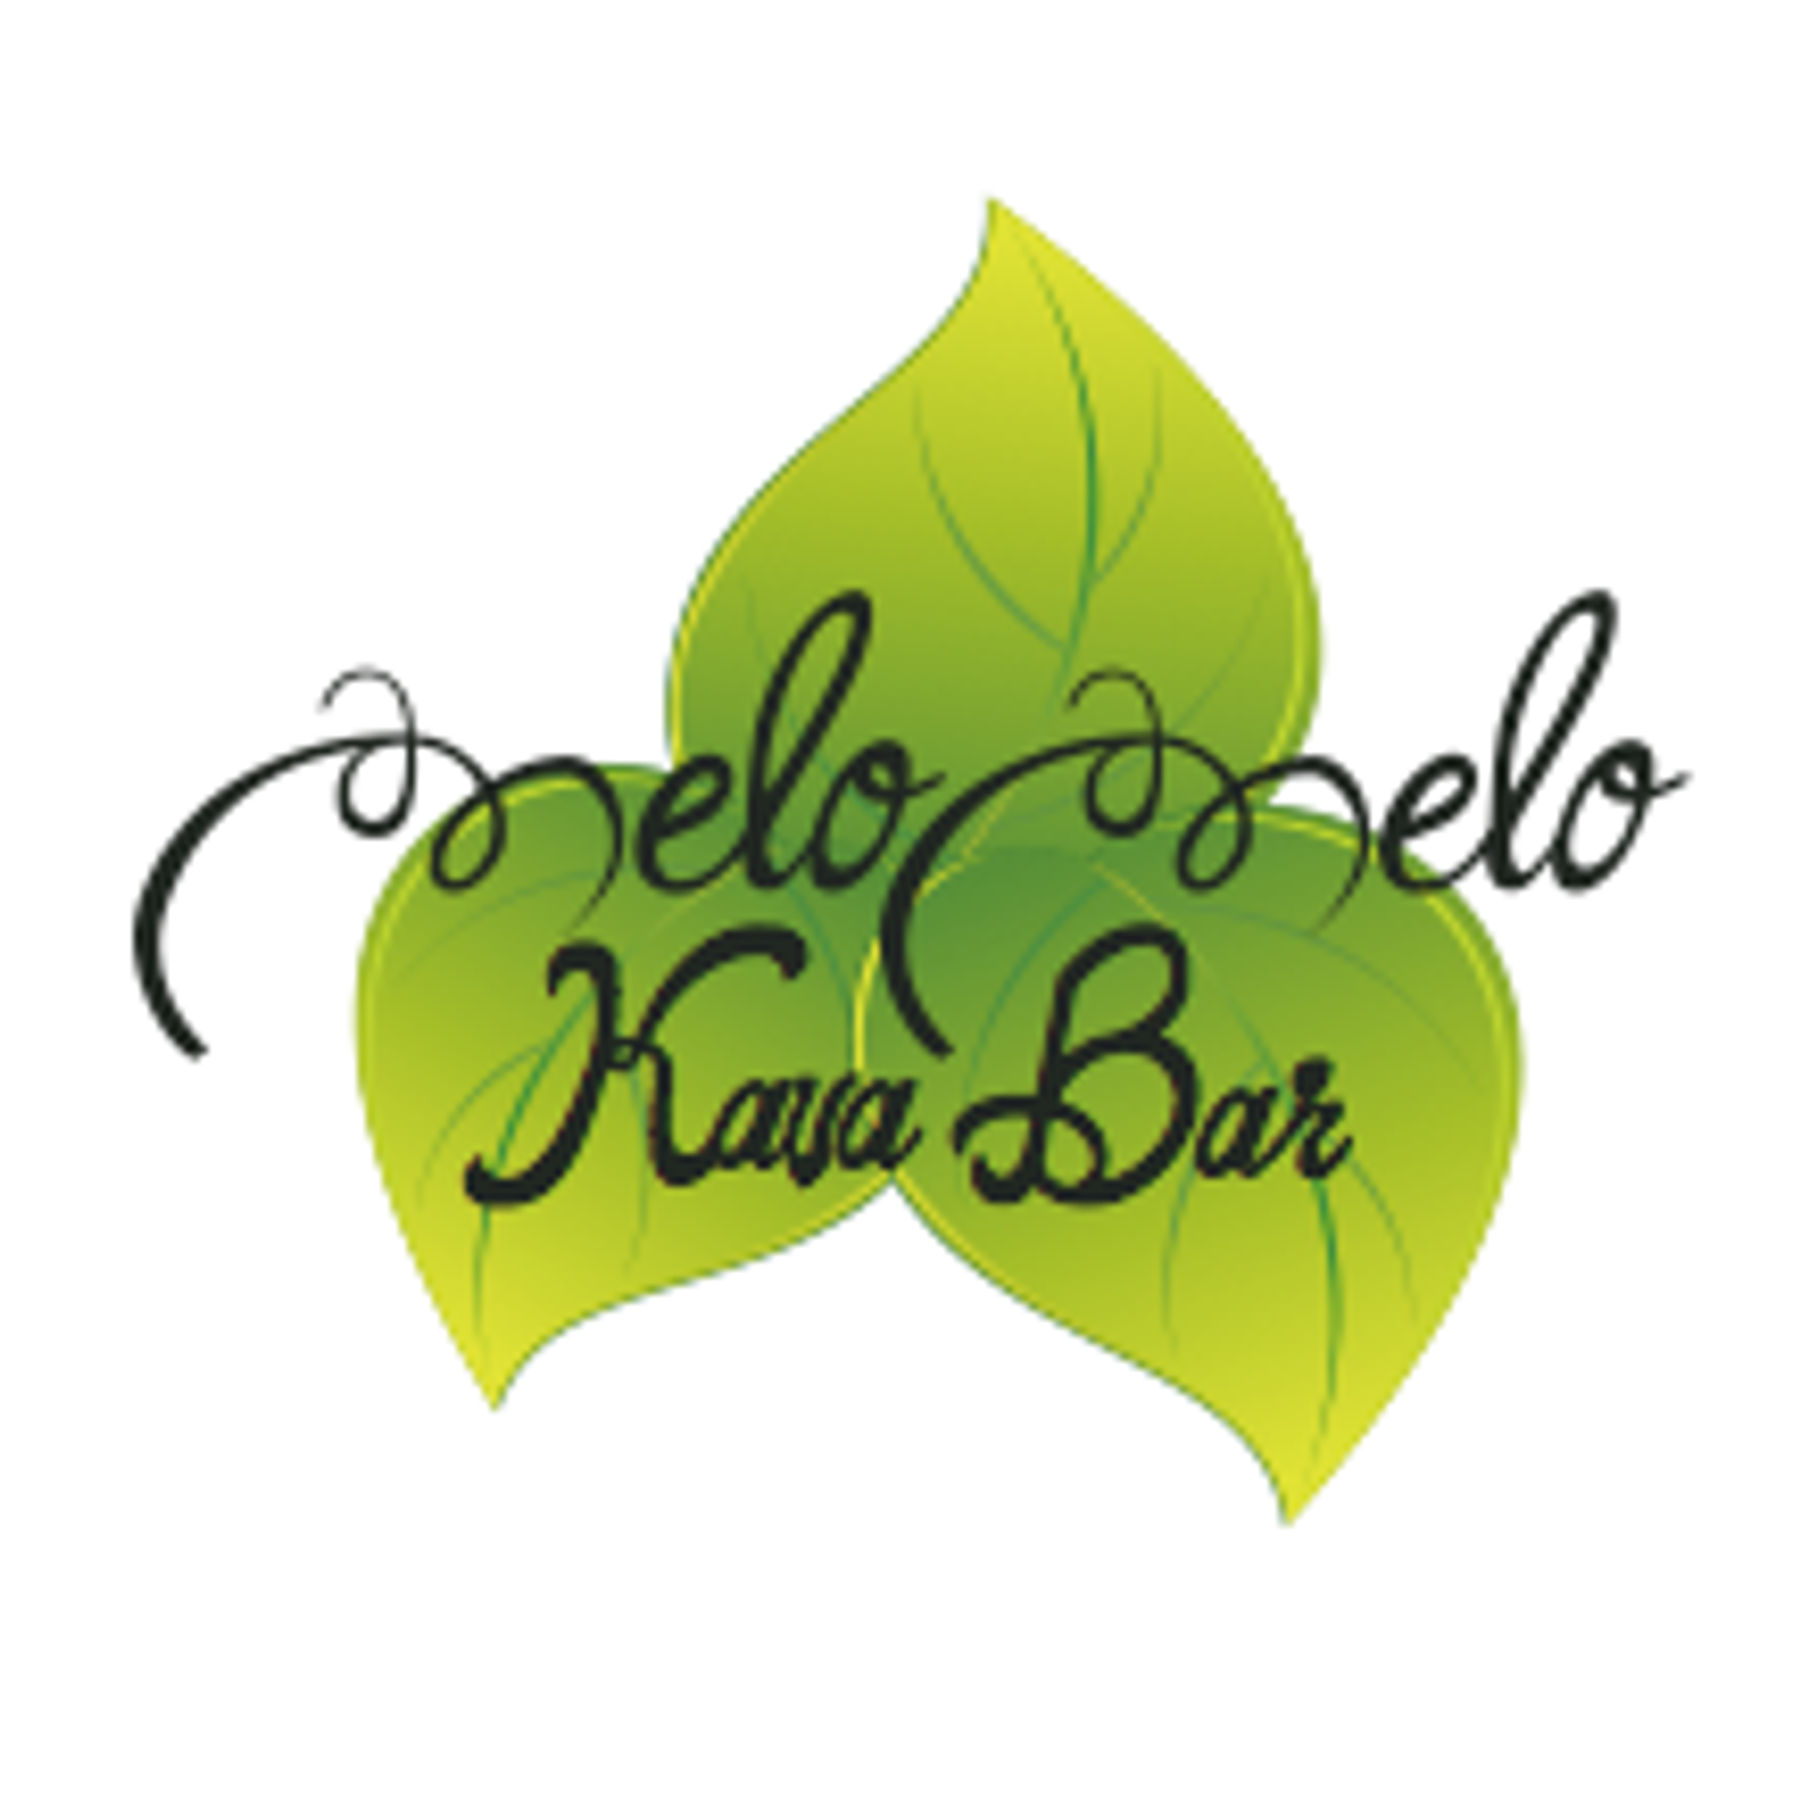 MeloMelo Kava Bar | Downtown Santa Cruz, CA